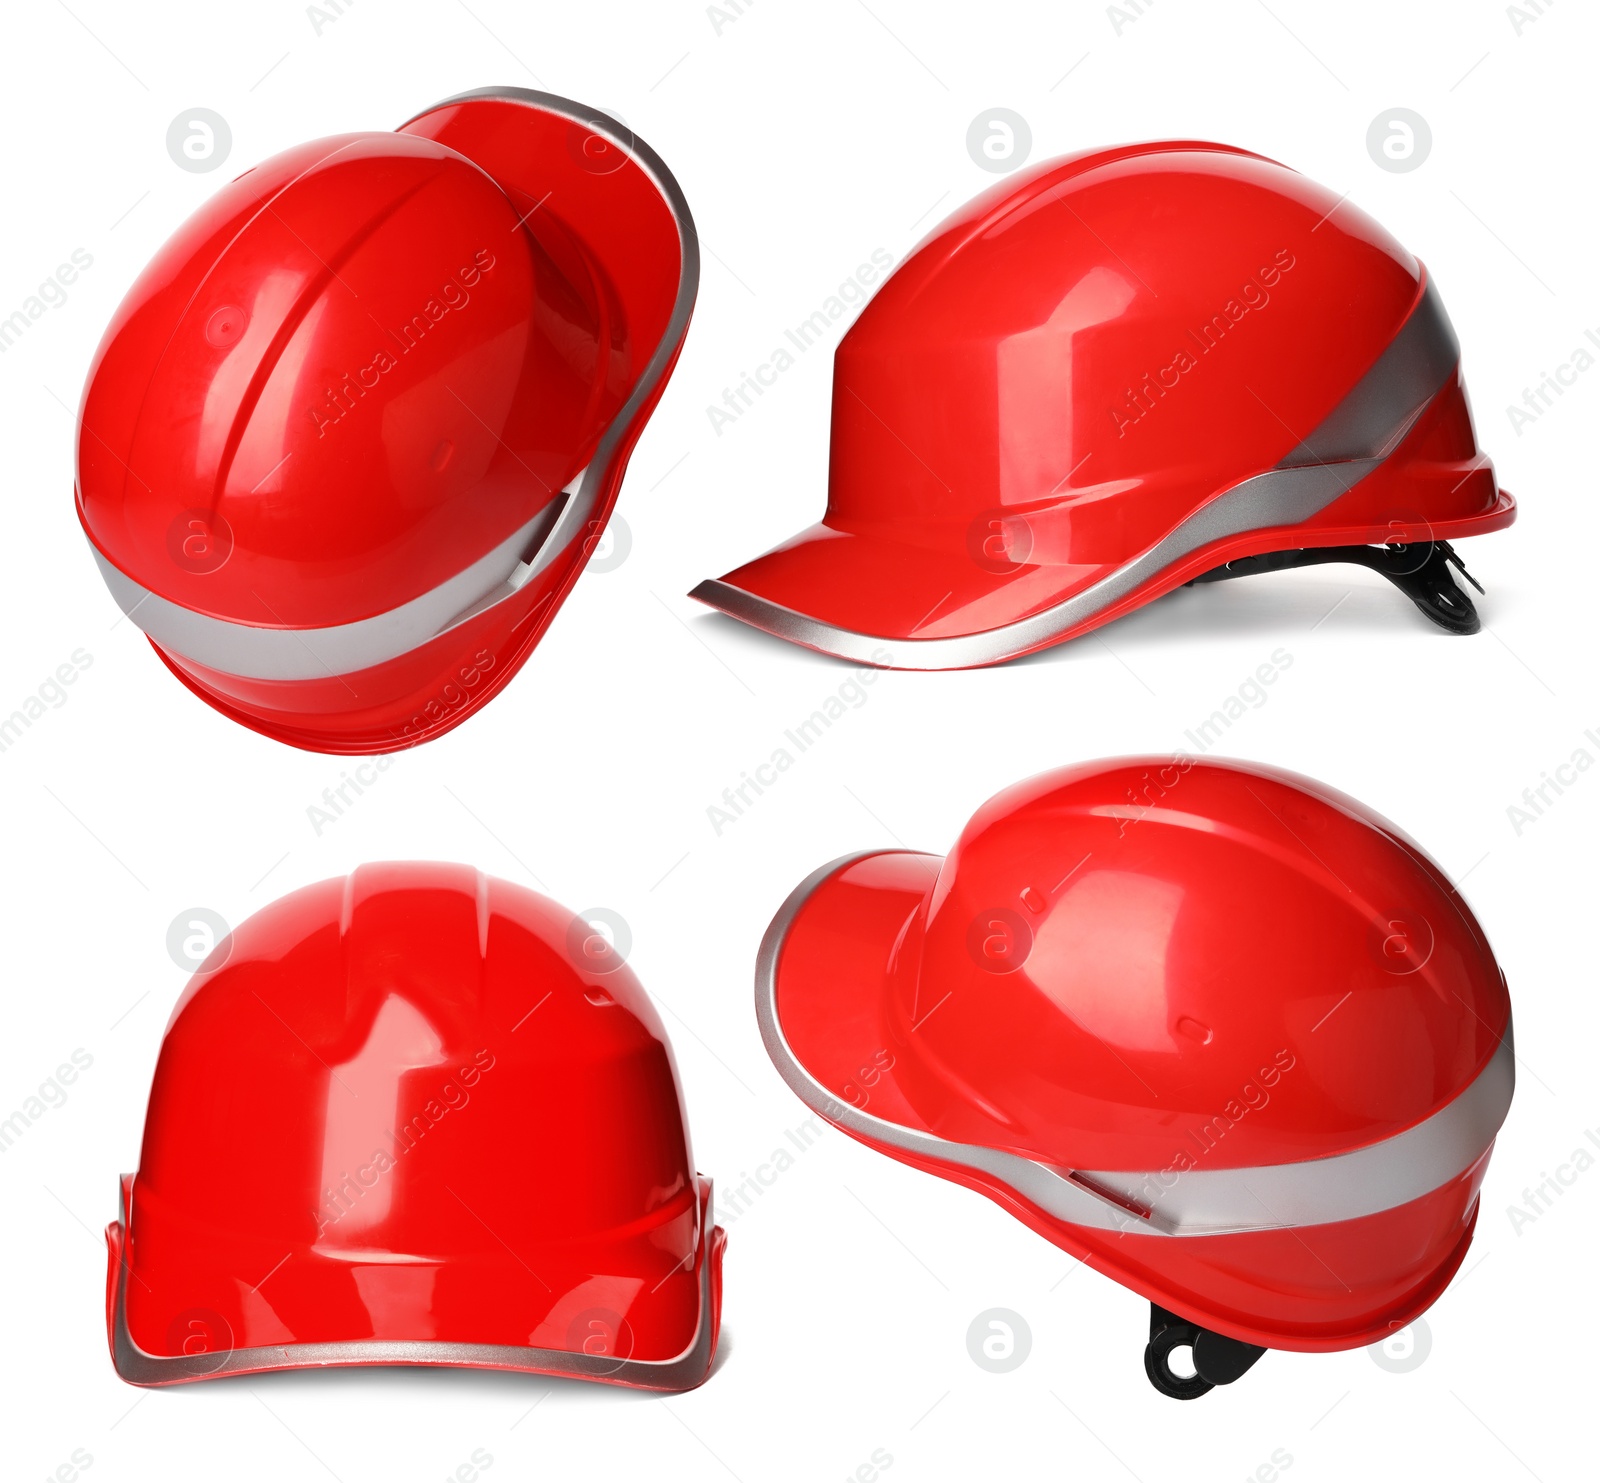 Image of Set with safety hardhat on white background. Construction tool